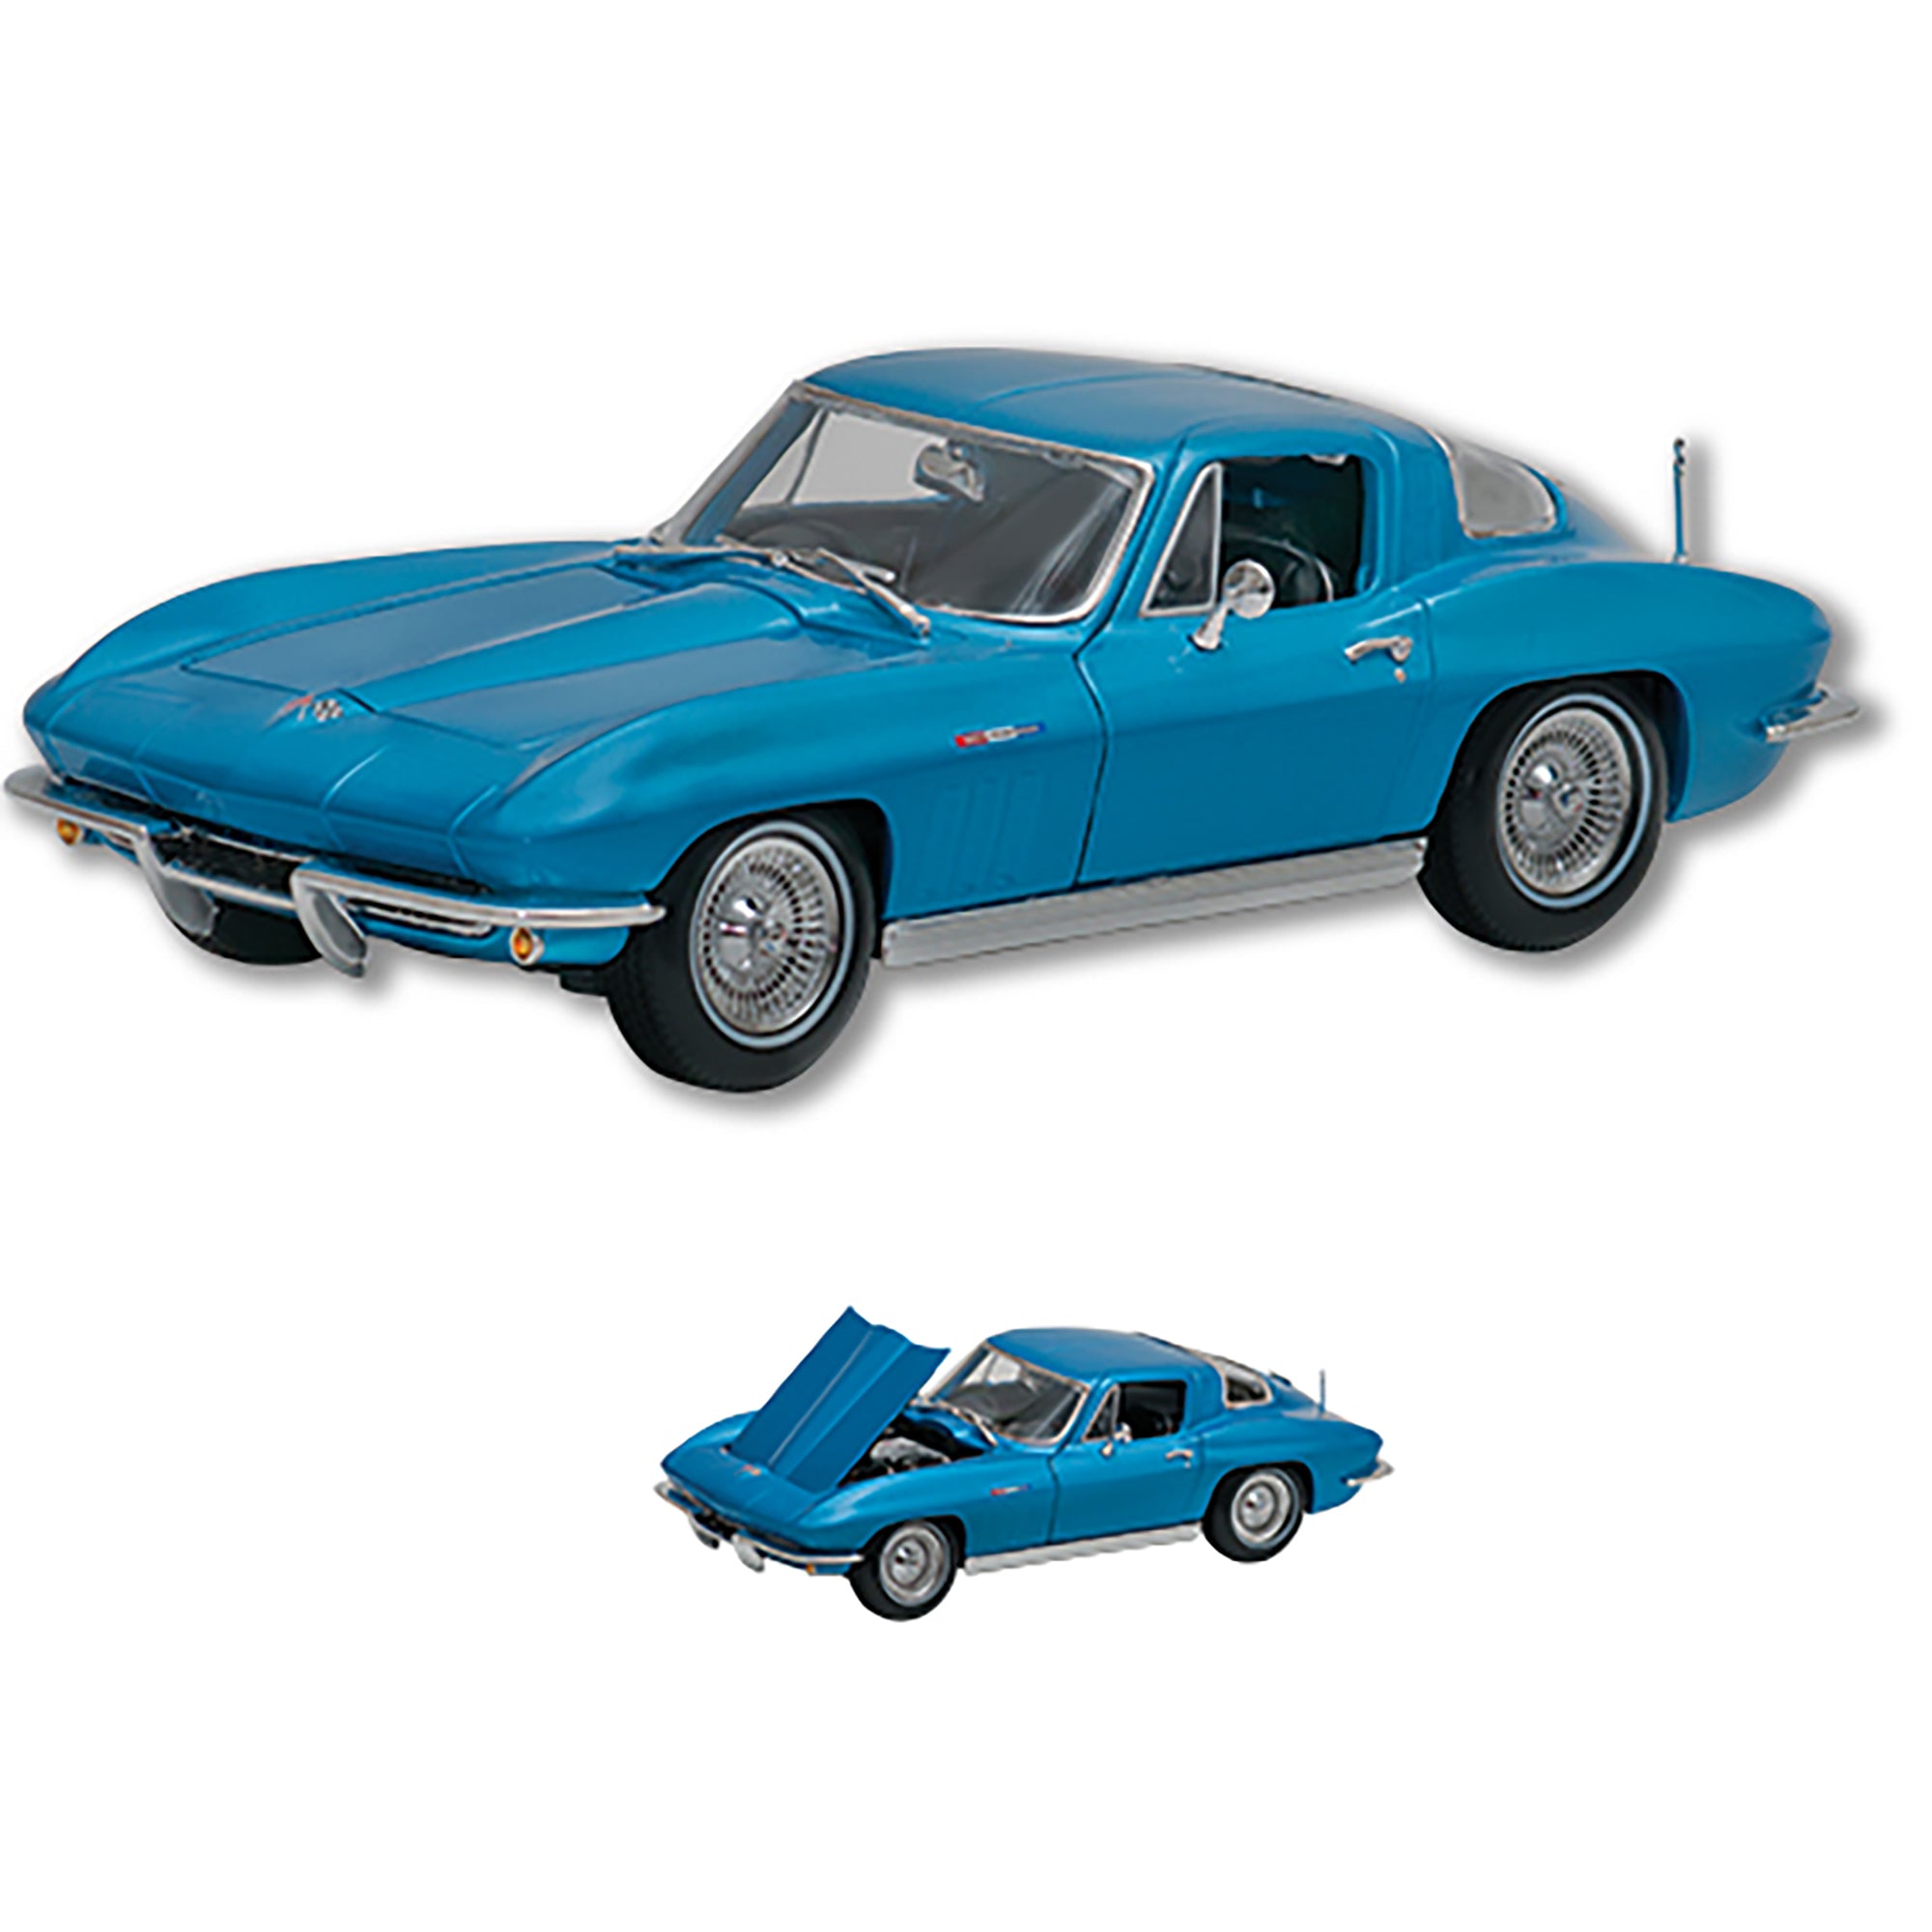 1:18th Scale 1965 Chevy Corvette C2 Diecast - Vette1 - C2 Diecast Models